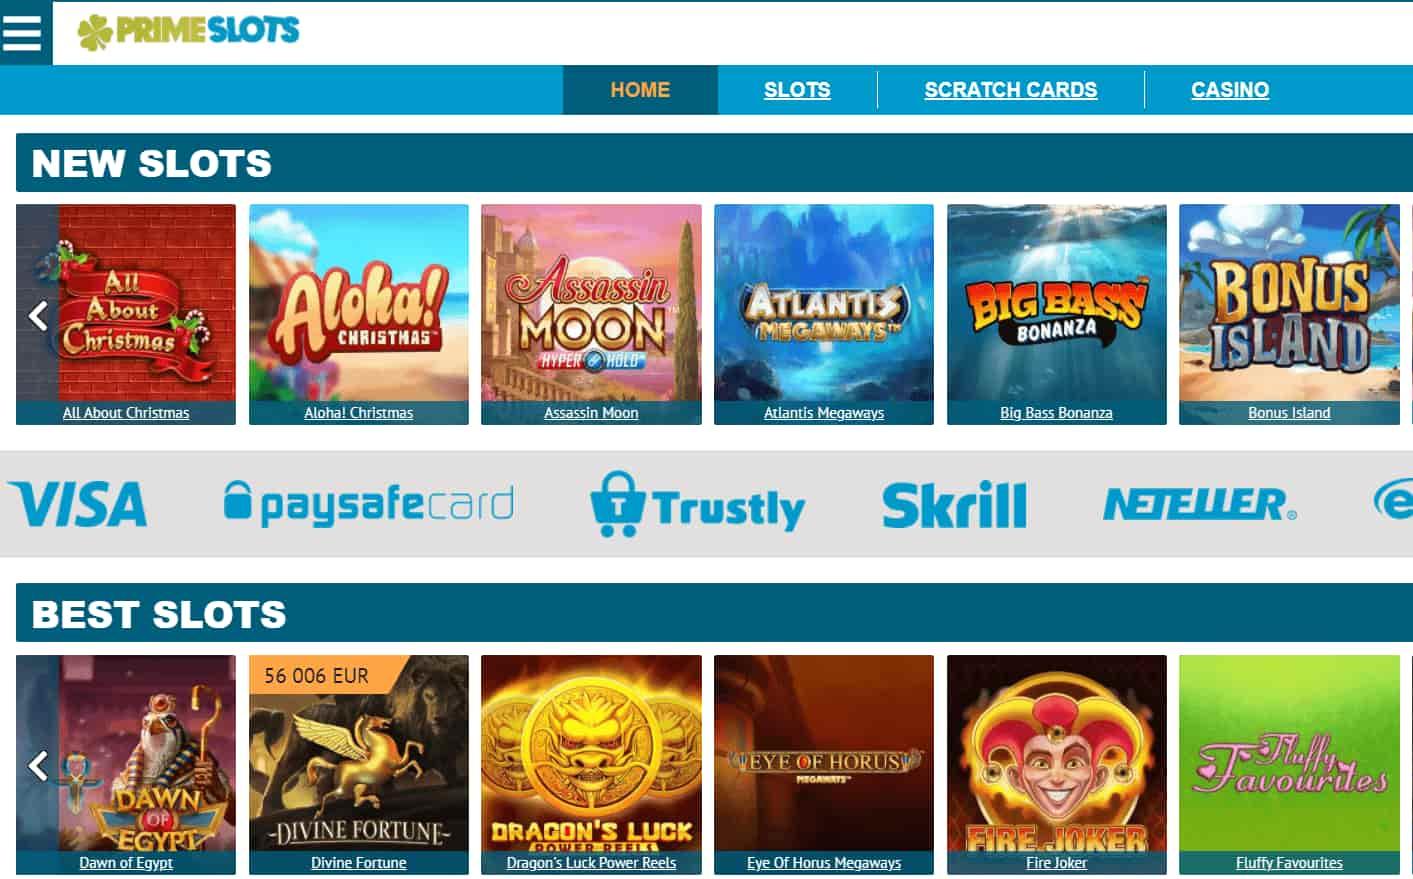 Prime Slots casino homepage